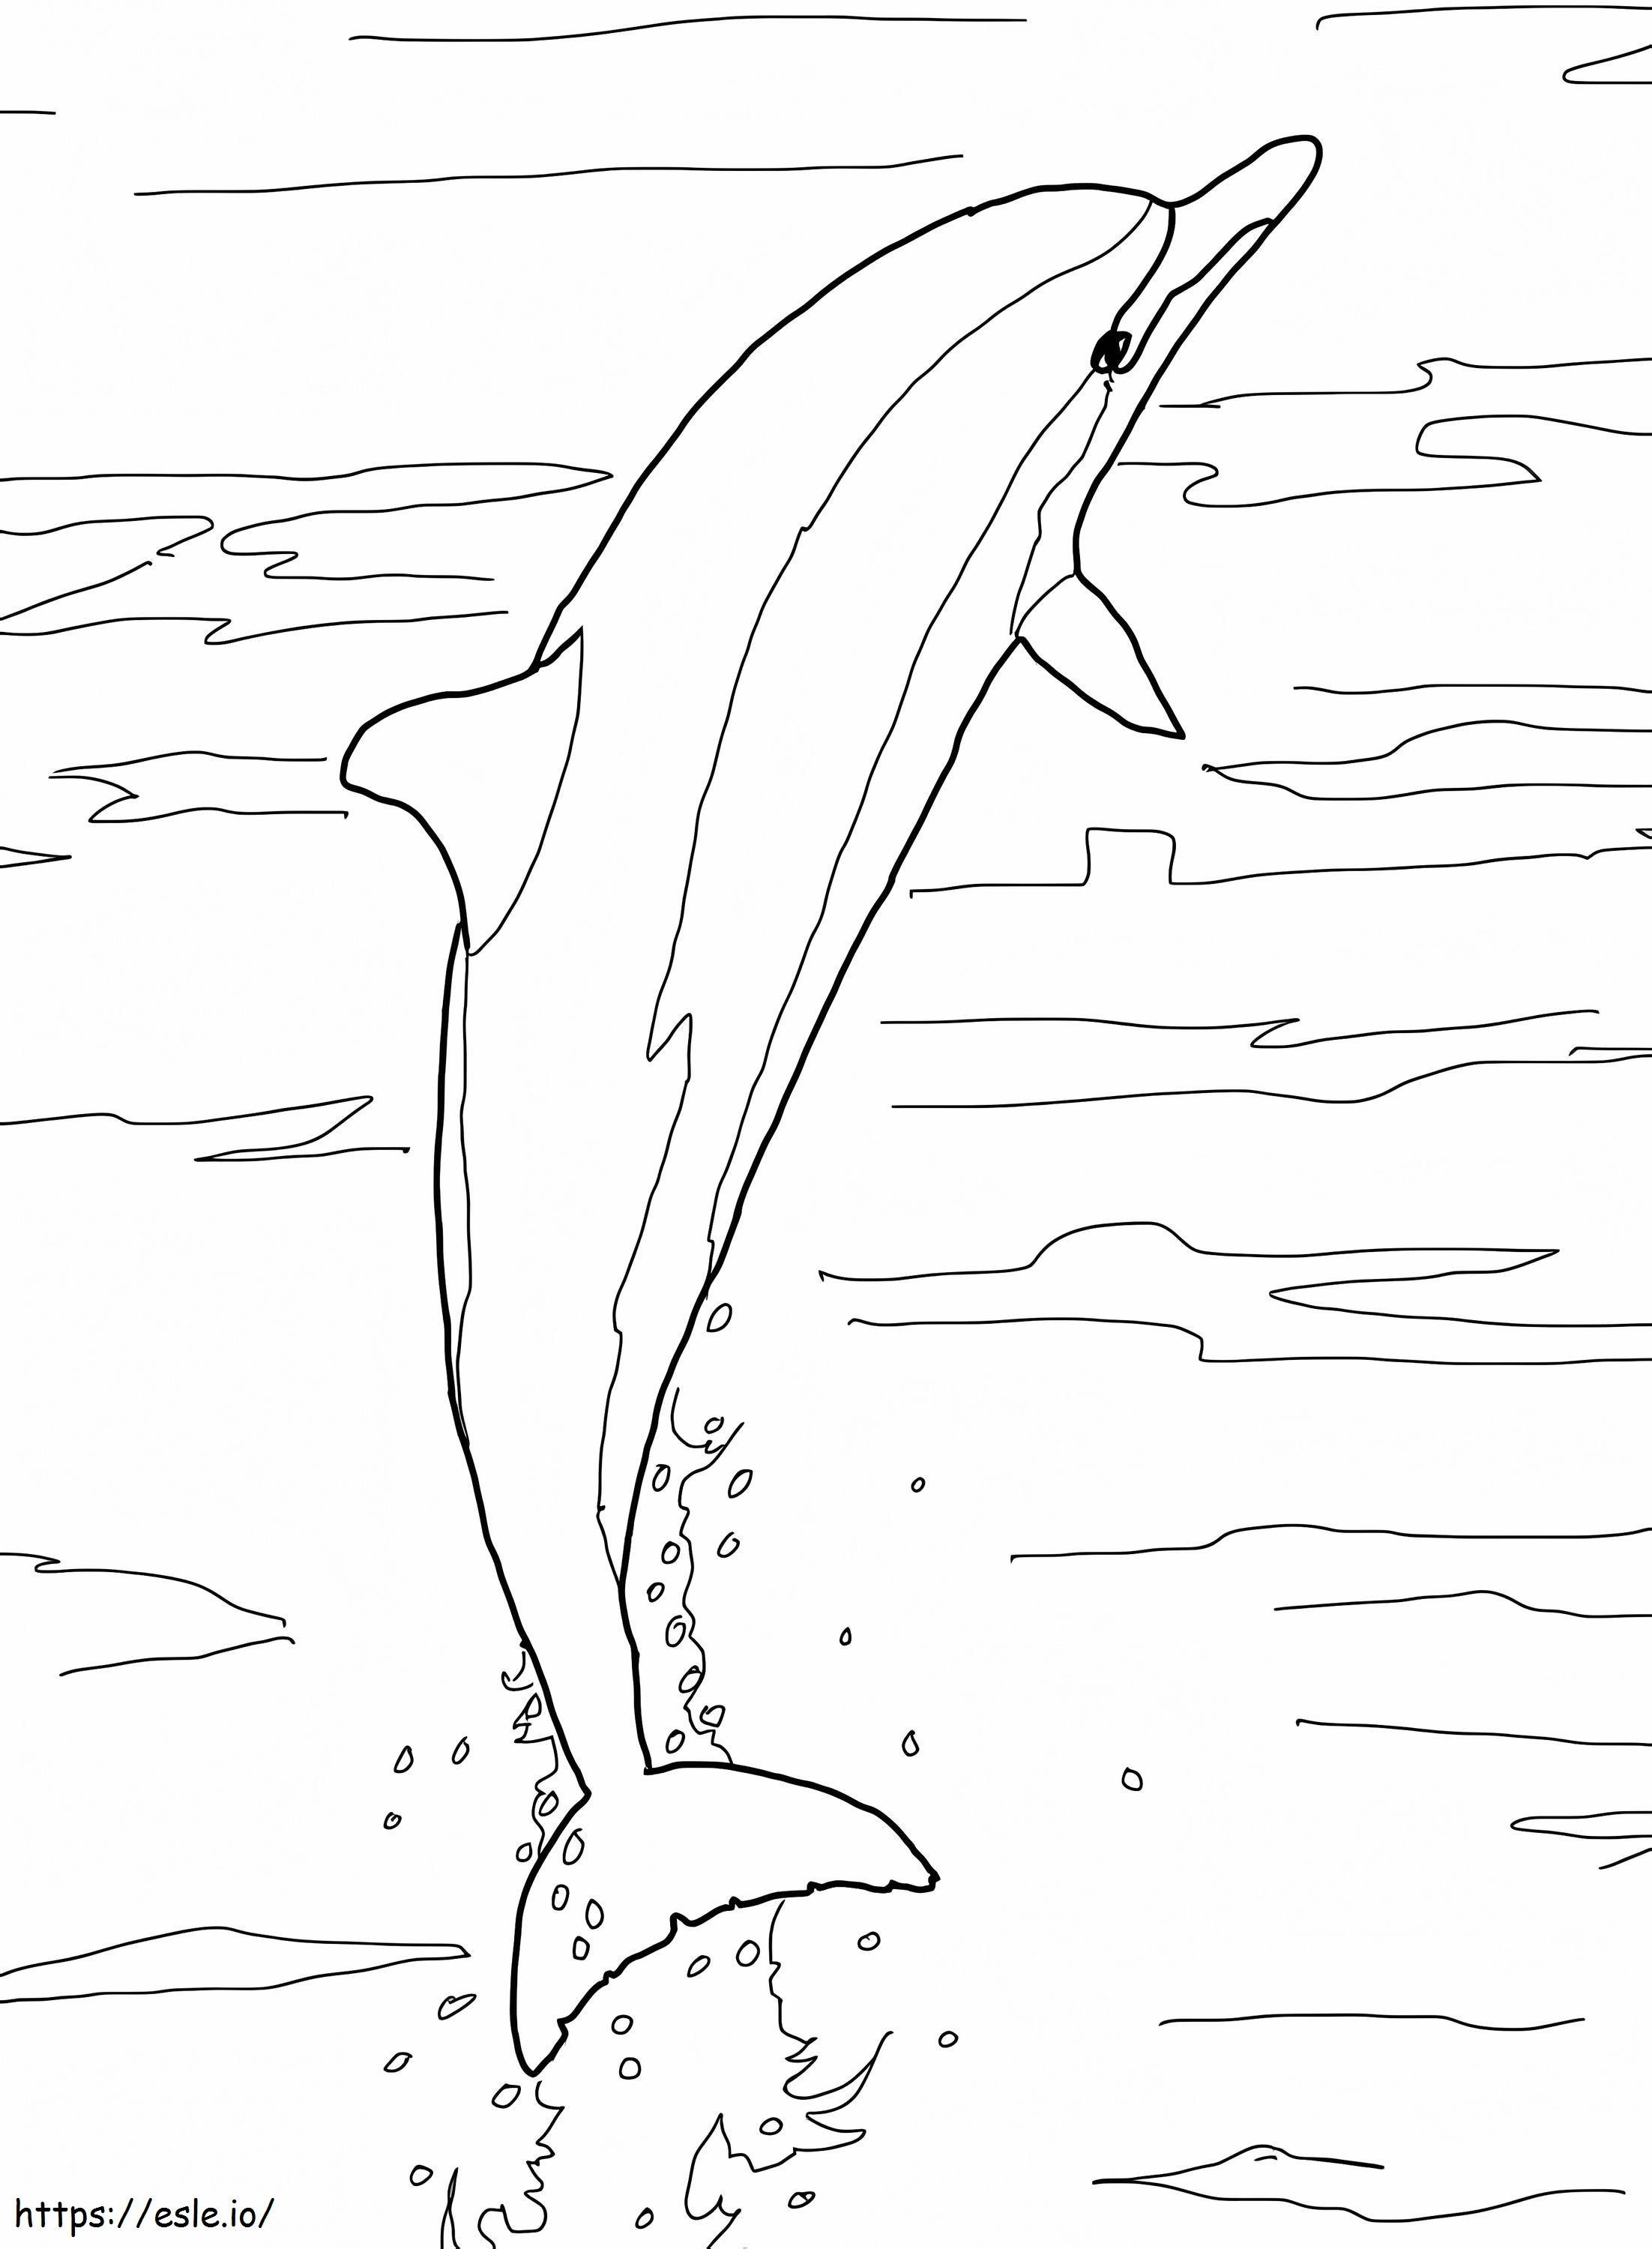 Salto de golfinhos de bico longo para colorir